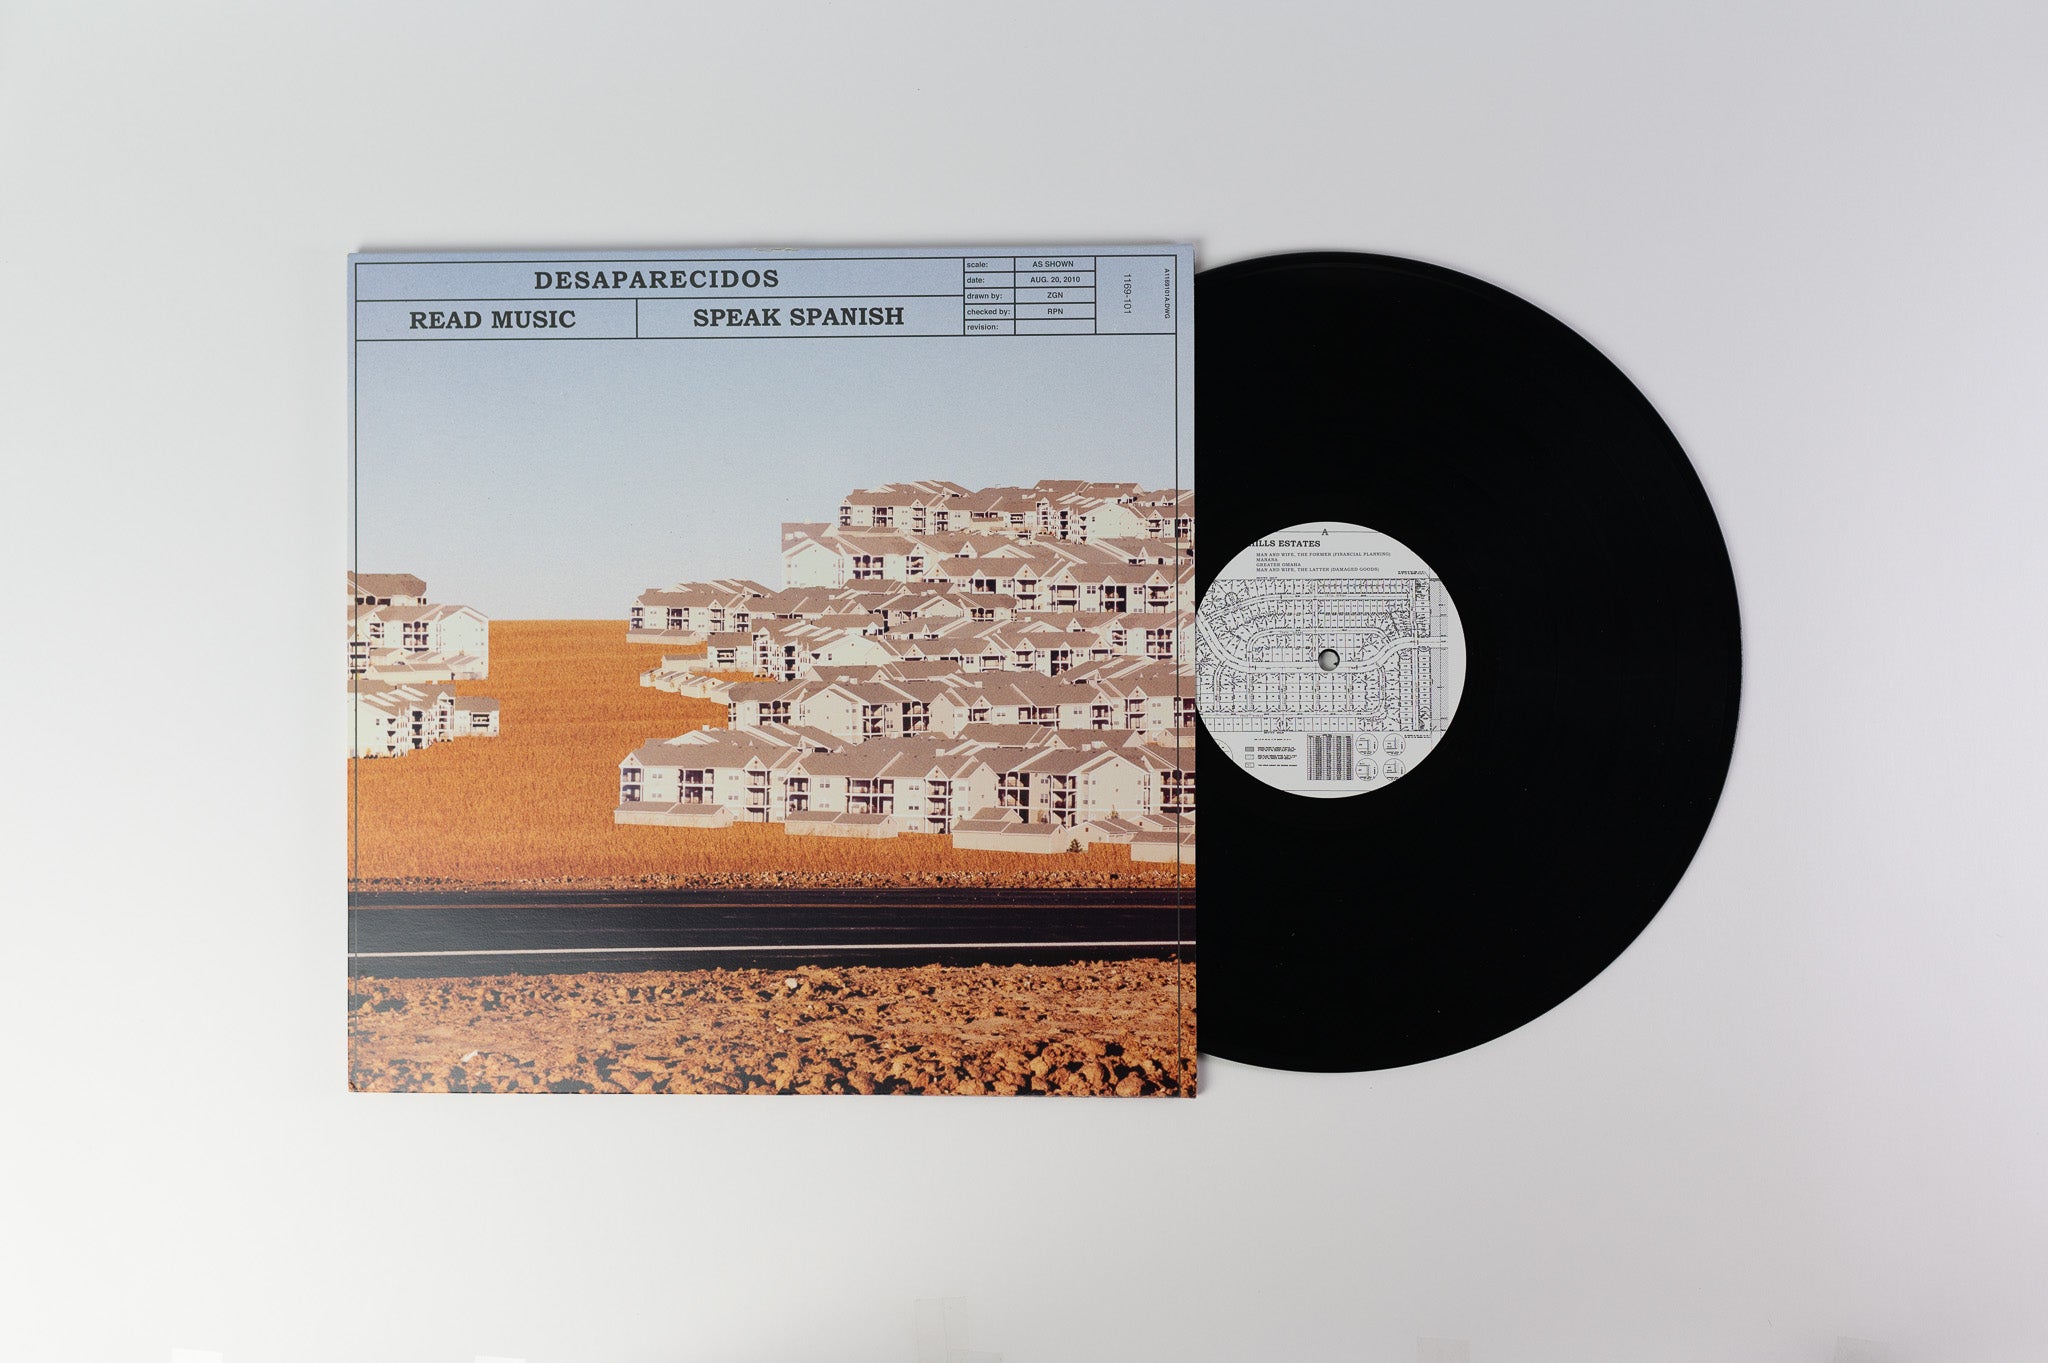 Desaparecidos - Read Music, Speak Spanish on Saddle Creek Reissue With 7" & CD